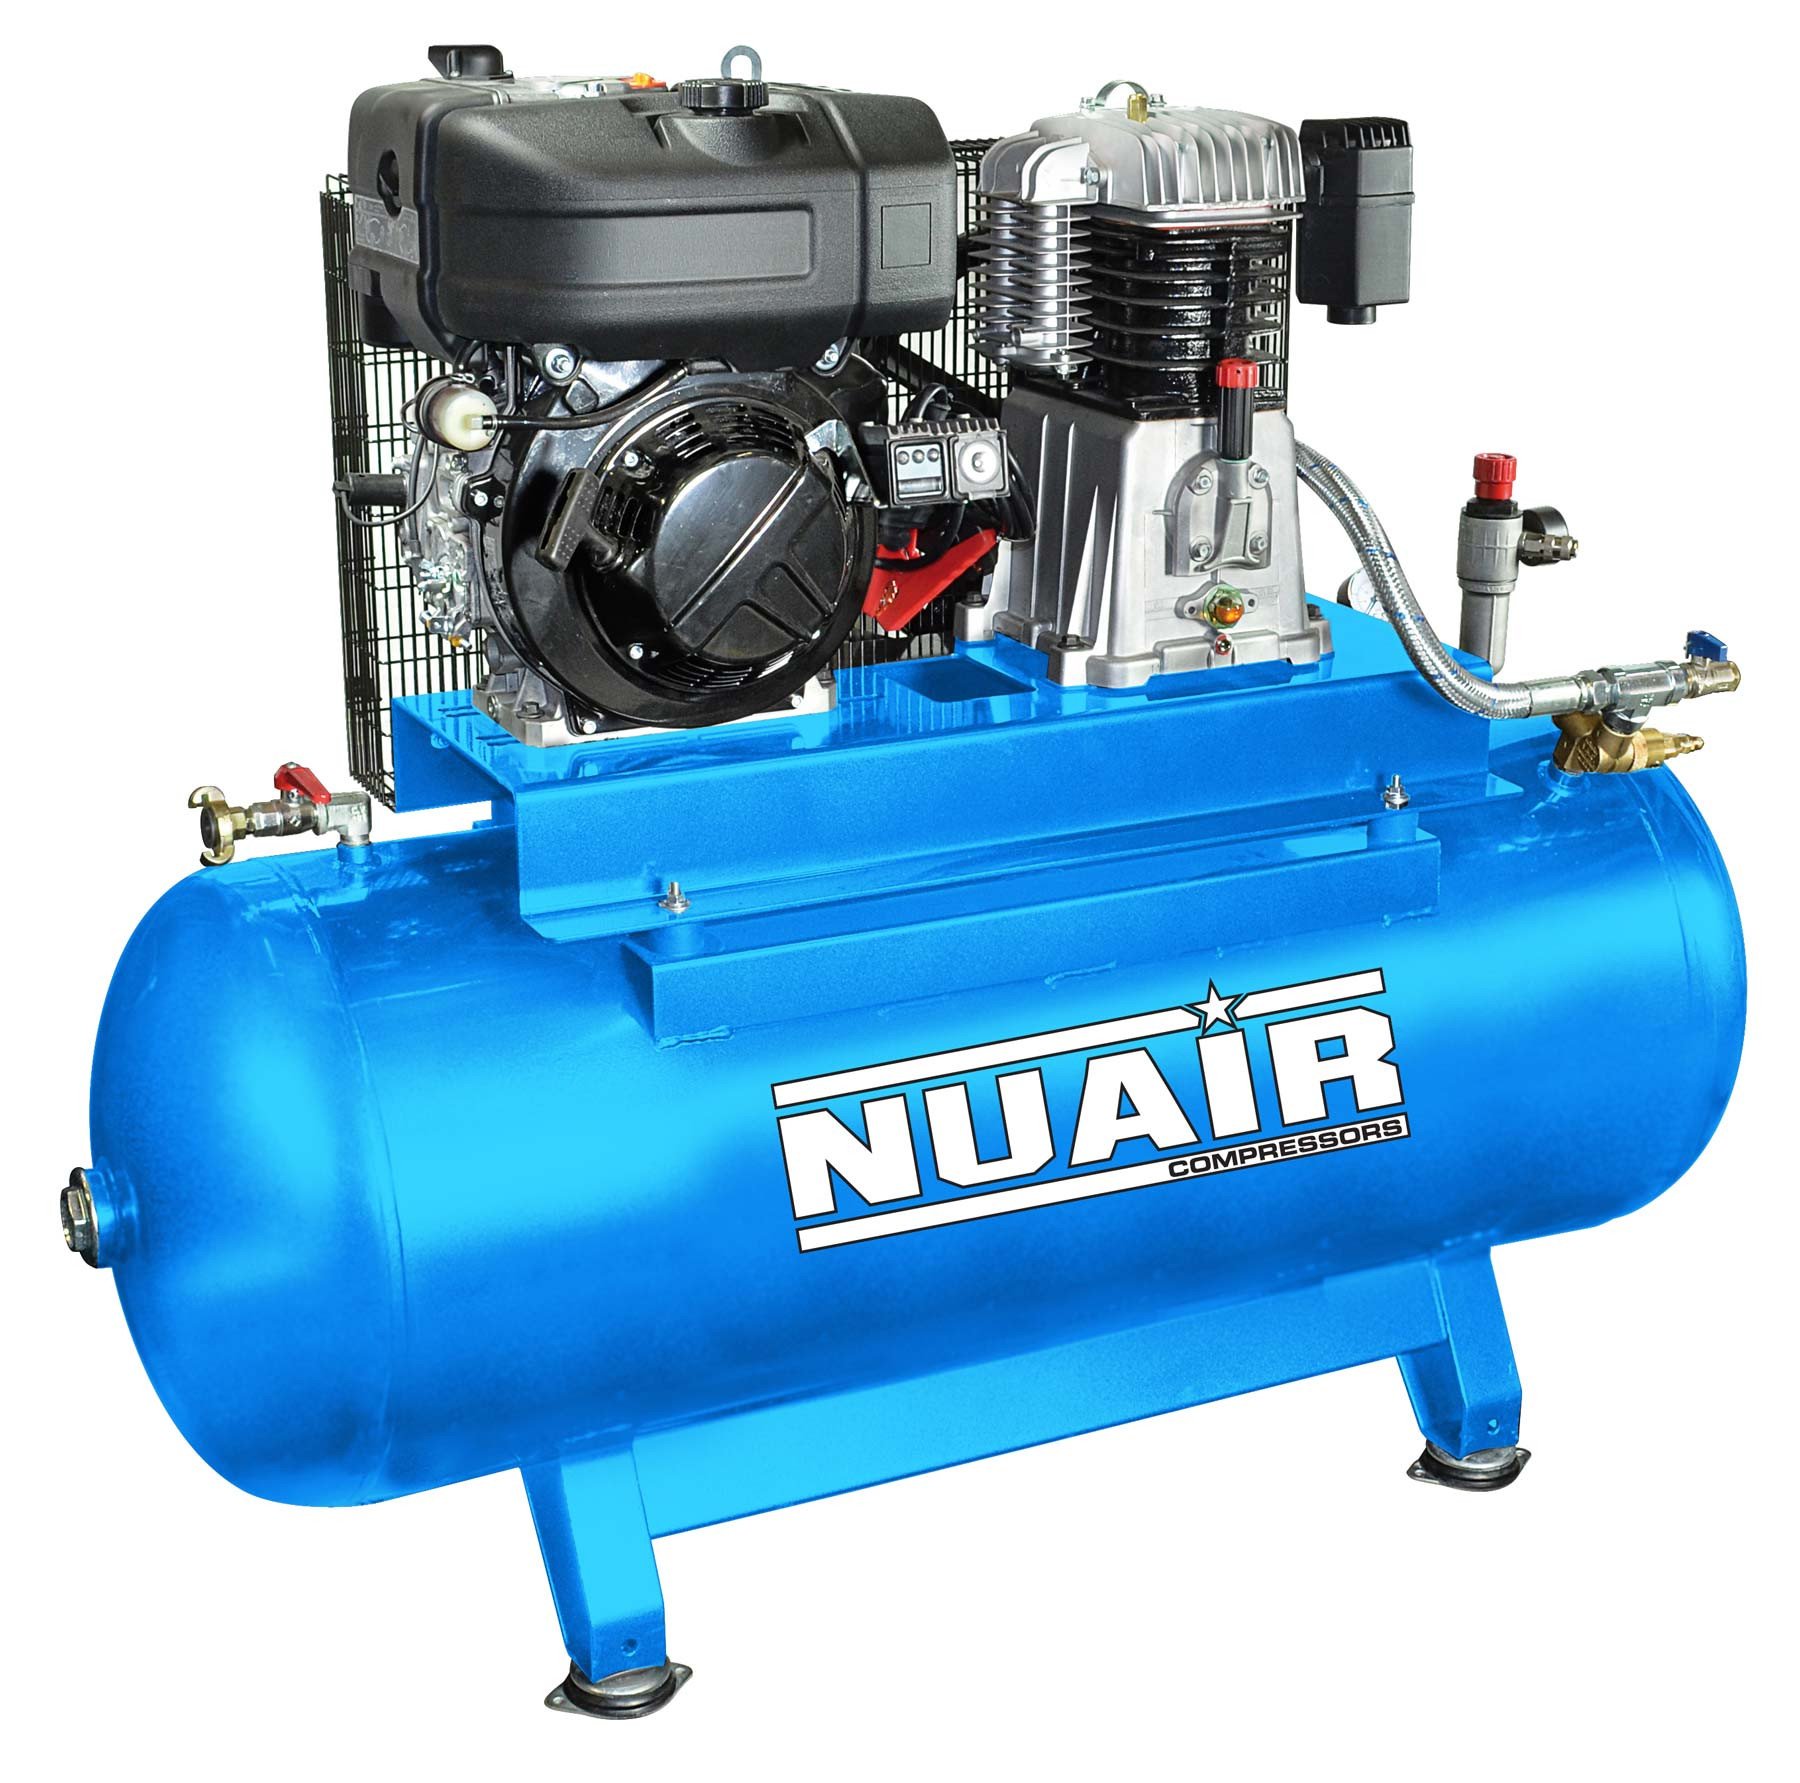 Nuair 500升专业/伦巴第尼柴油带传动空气压缩机- 33.3 CFM 10马力